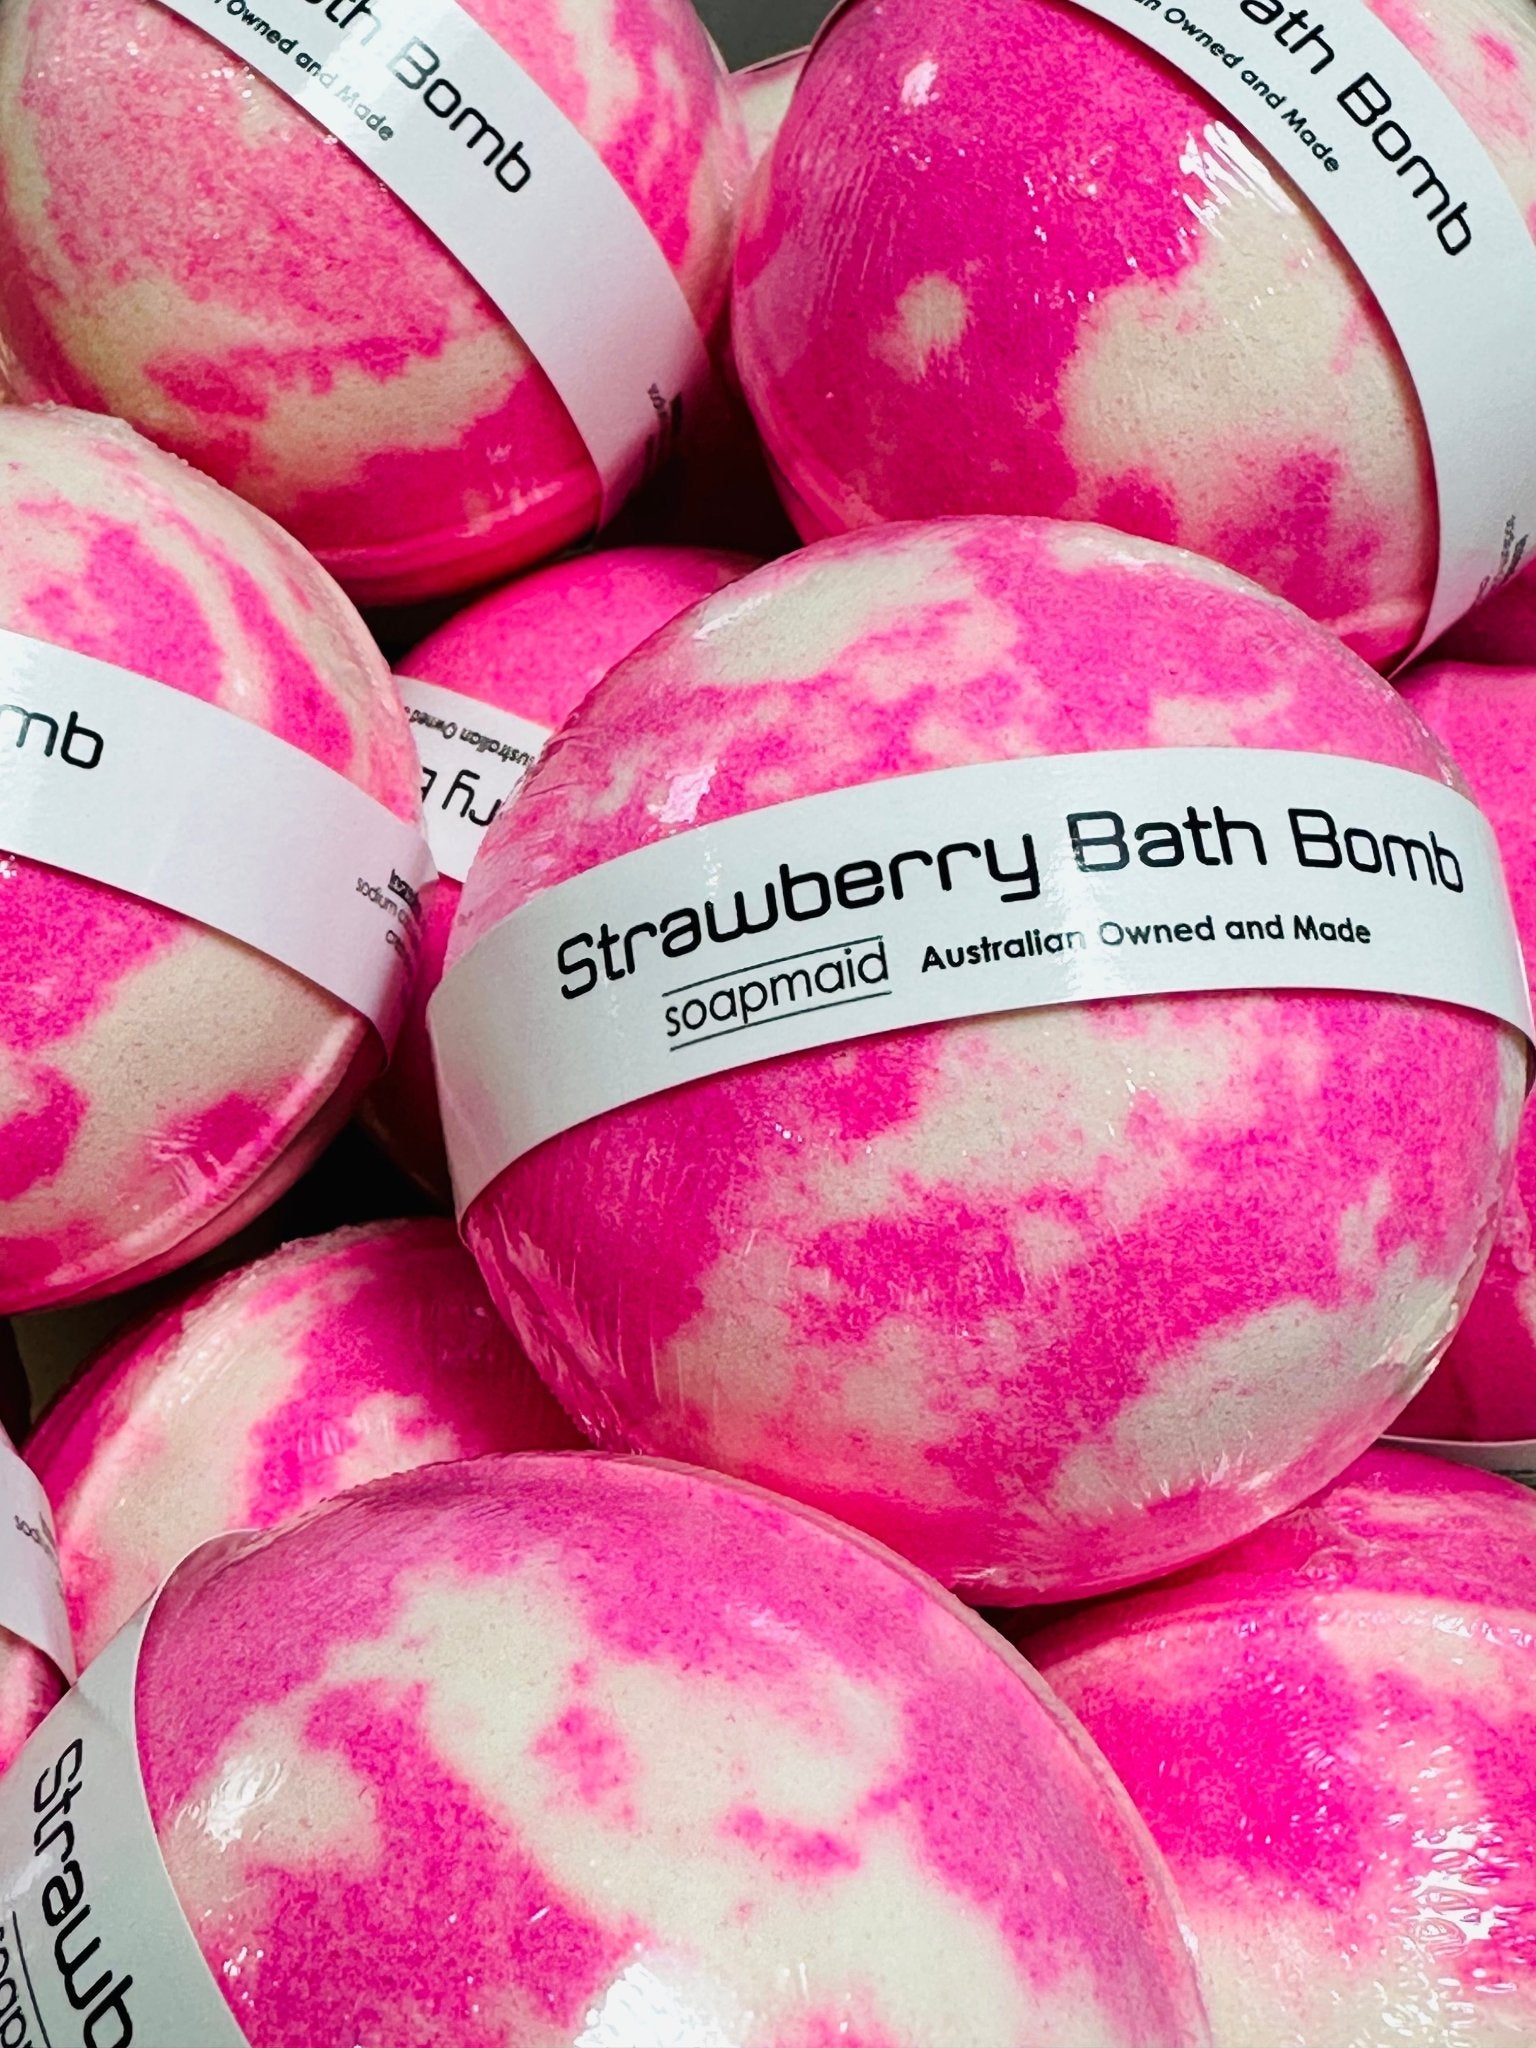 Strawberry Bath Bomb - Soapmaid